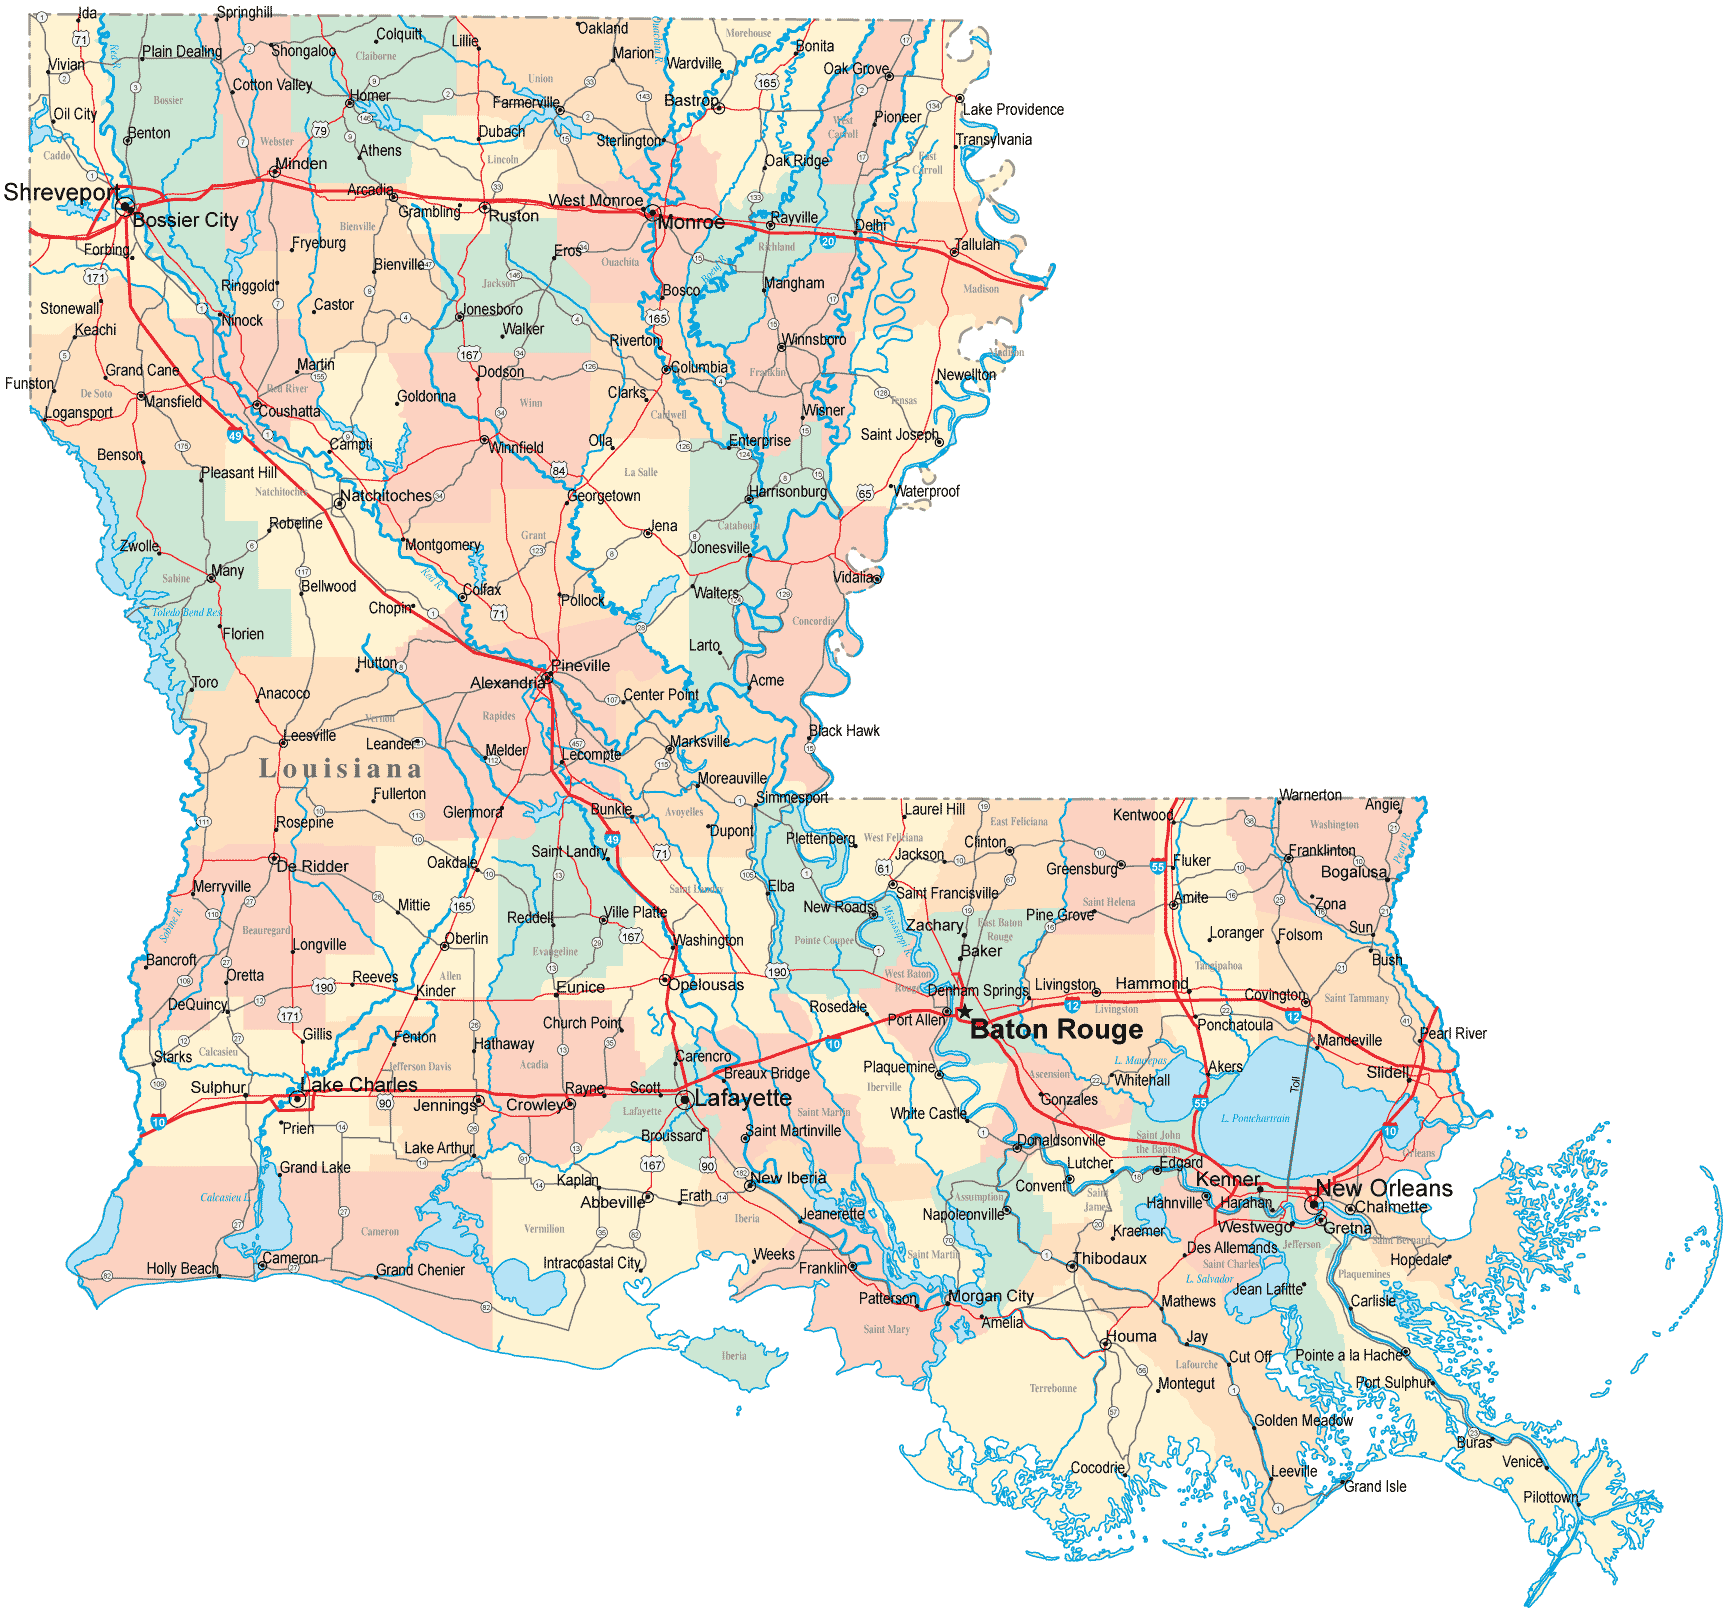 Louisiana, LA - Travel Around USA